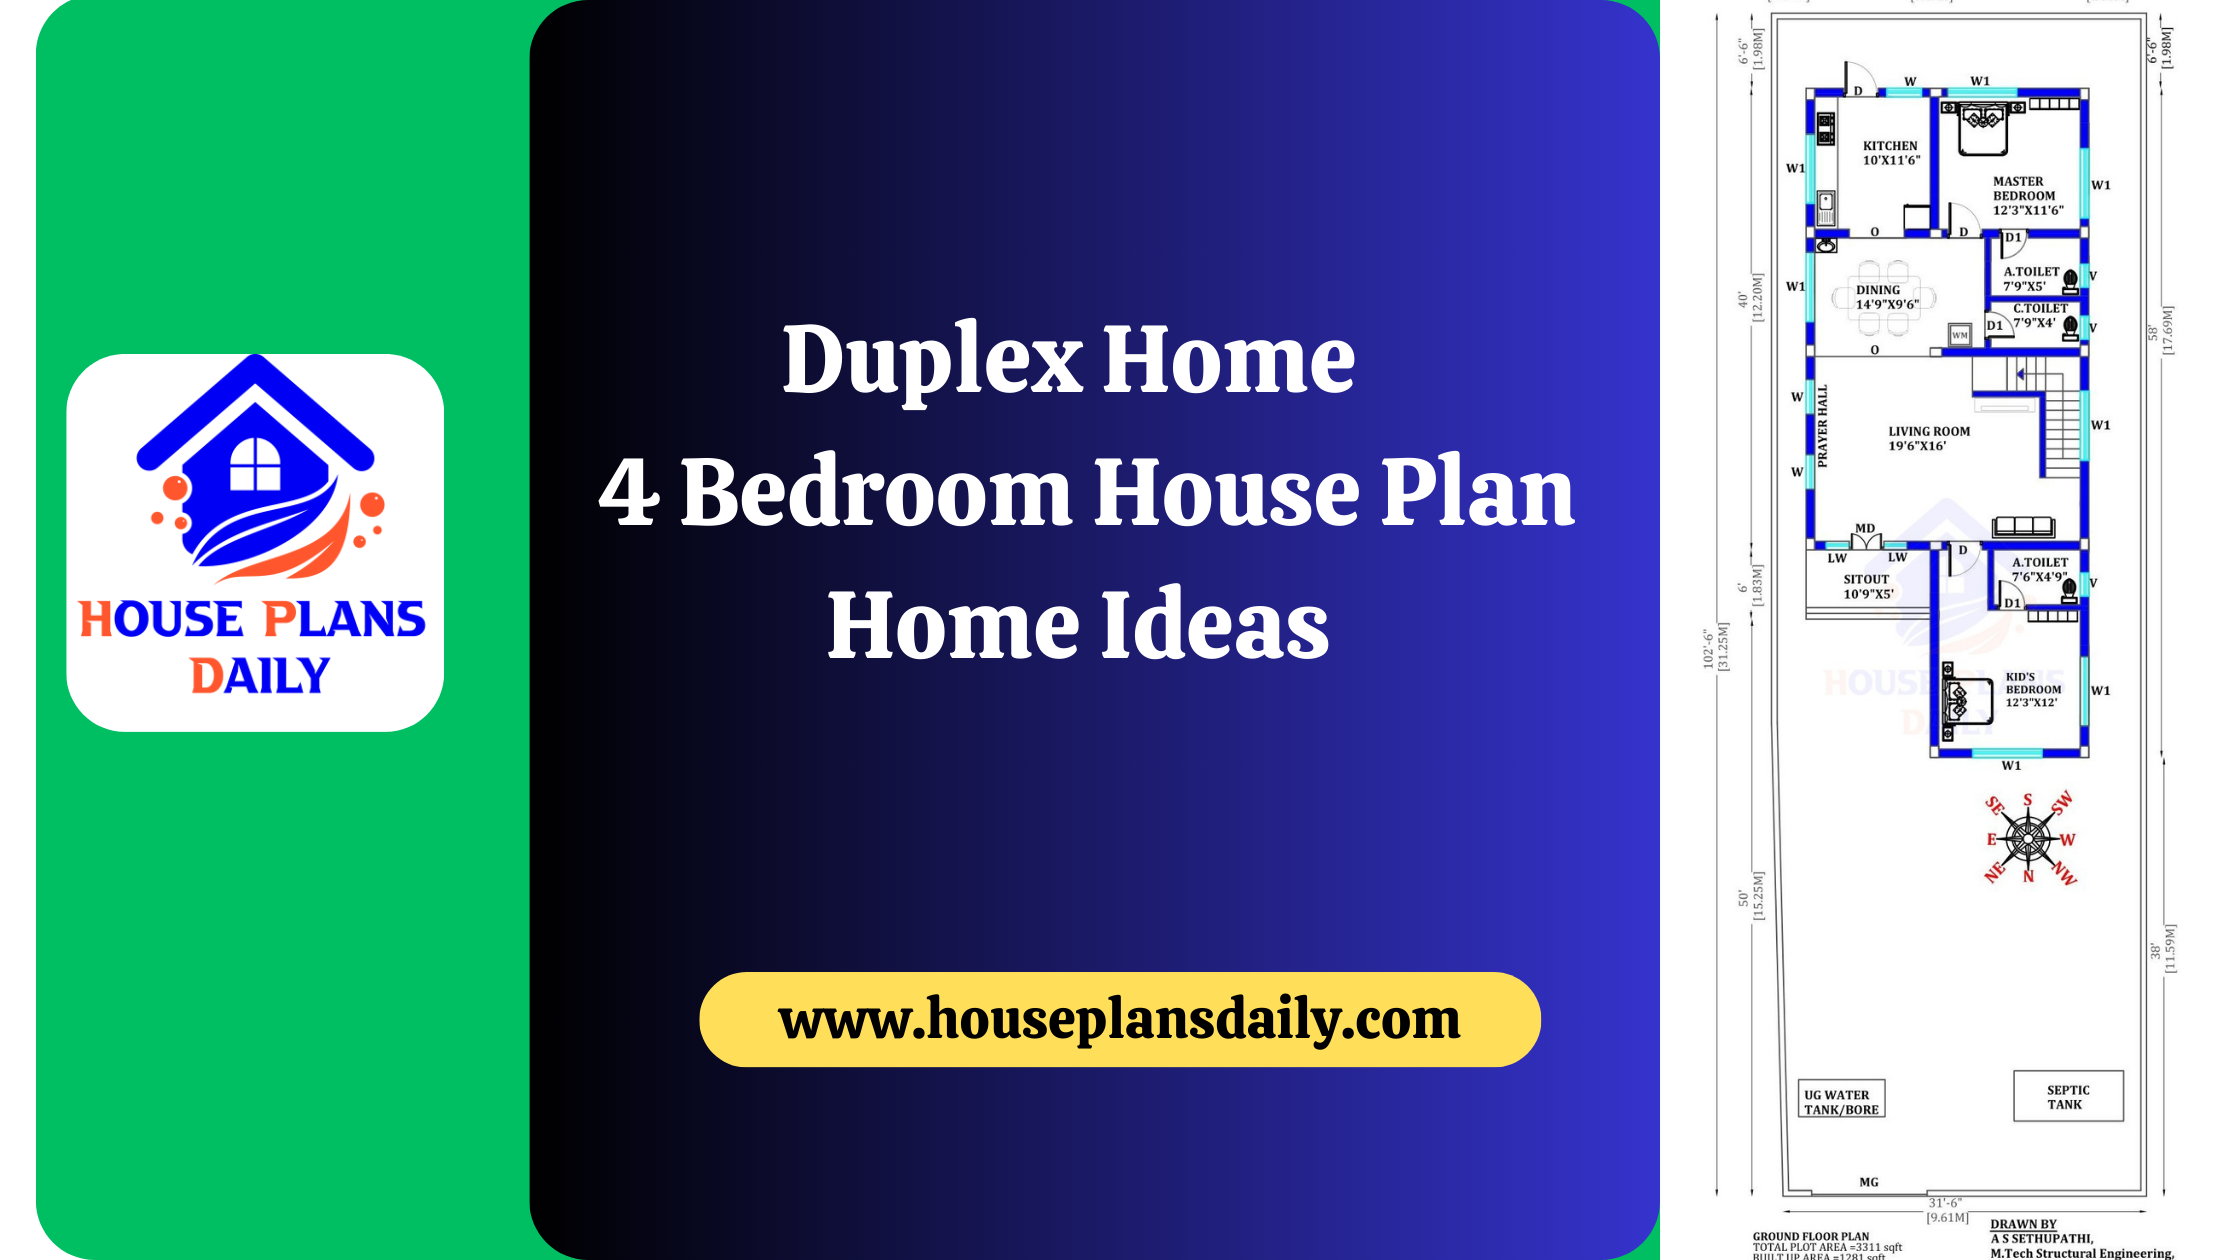 Duplex Home | 4 Bedroom House Plan | Home Ideas